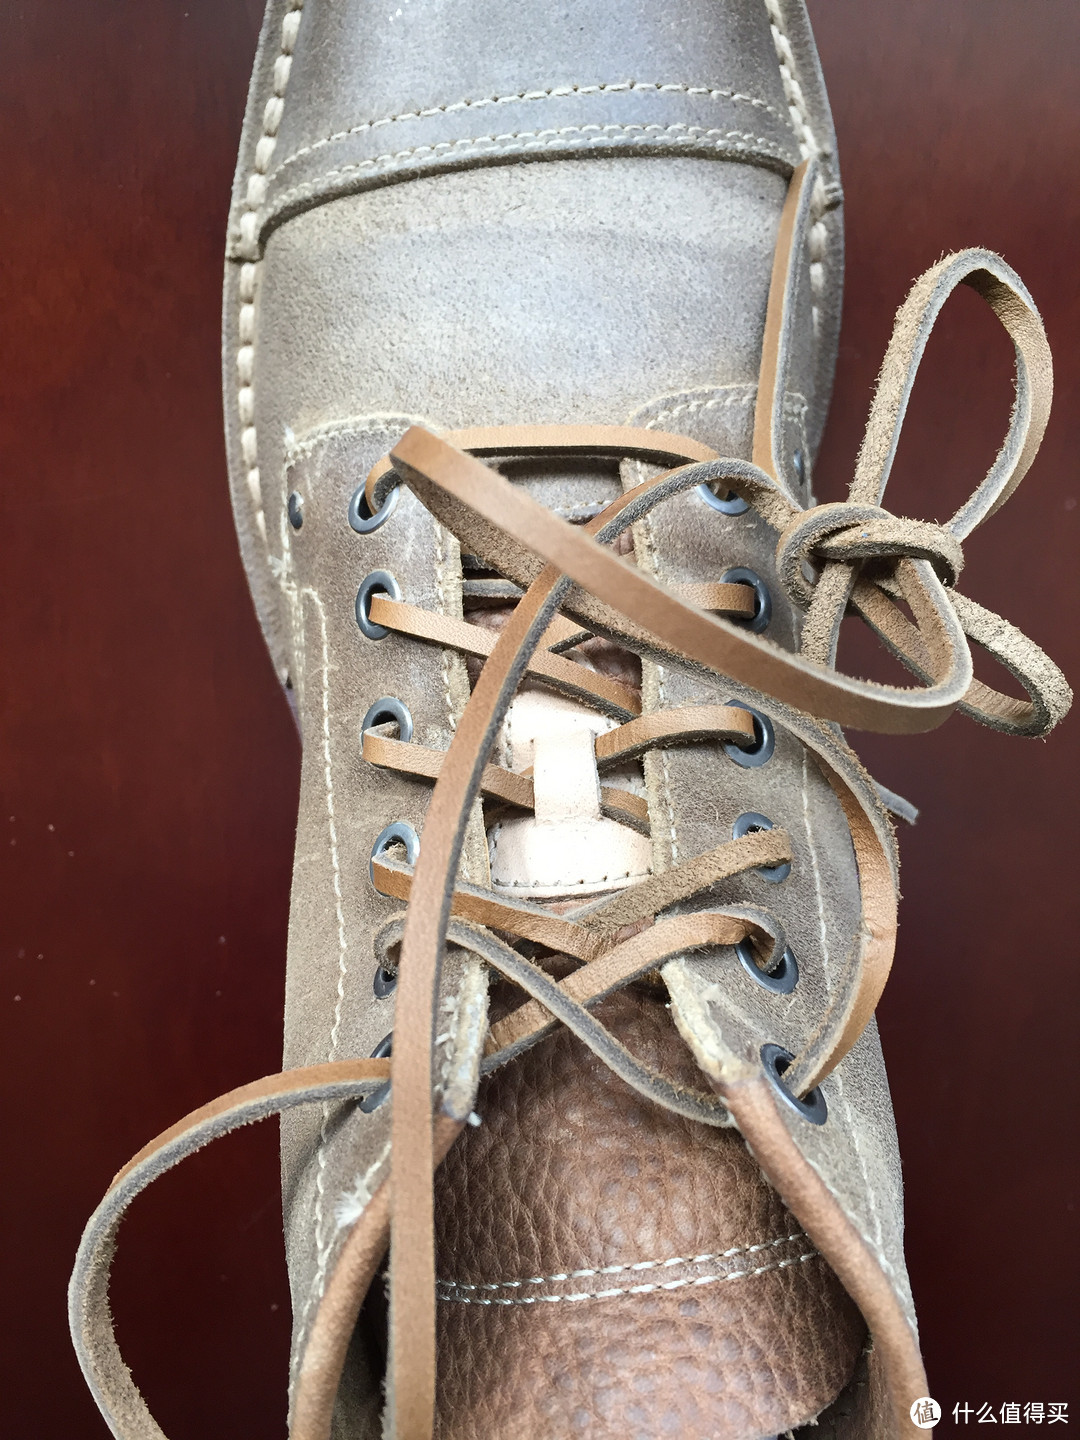 感受那一种硬派与古典美：Cole Haan Weston Lace Boots